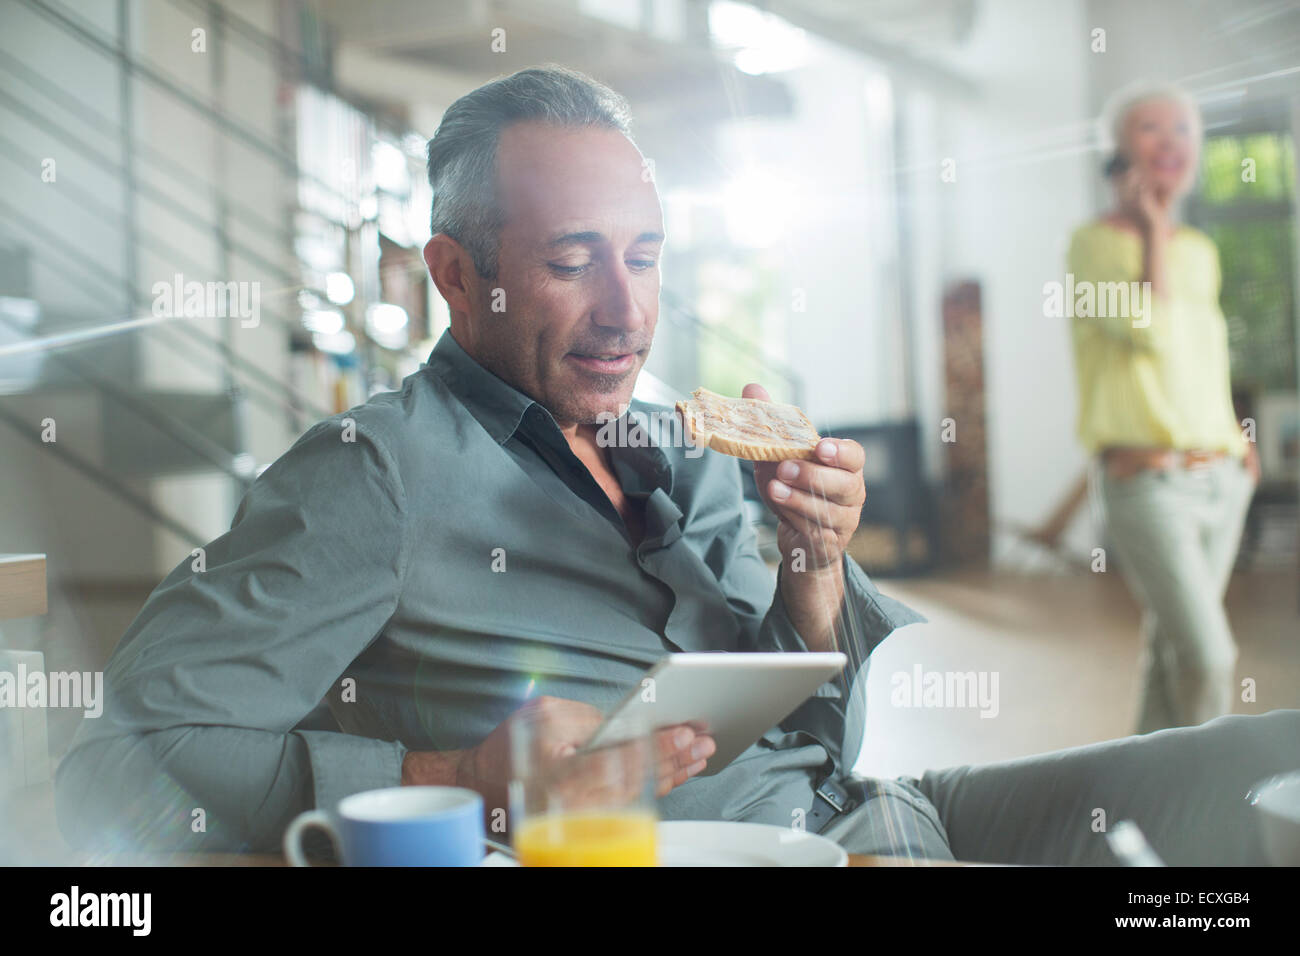 Older man using digital tablet at breakfast table Stock Photo